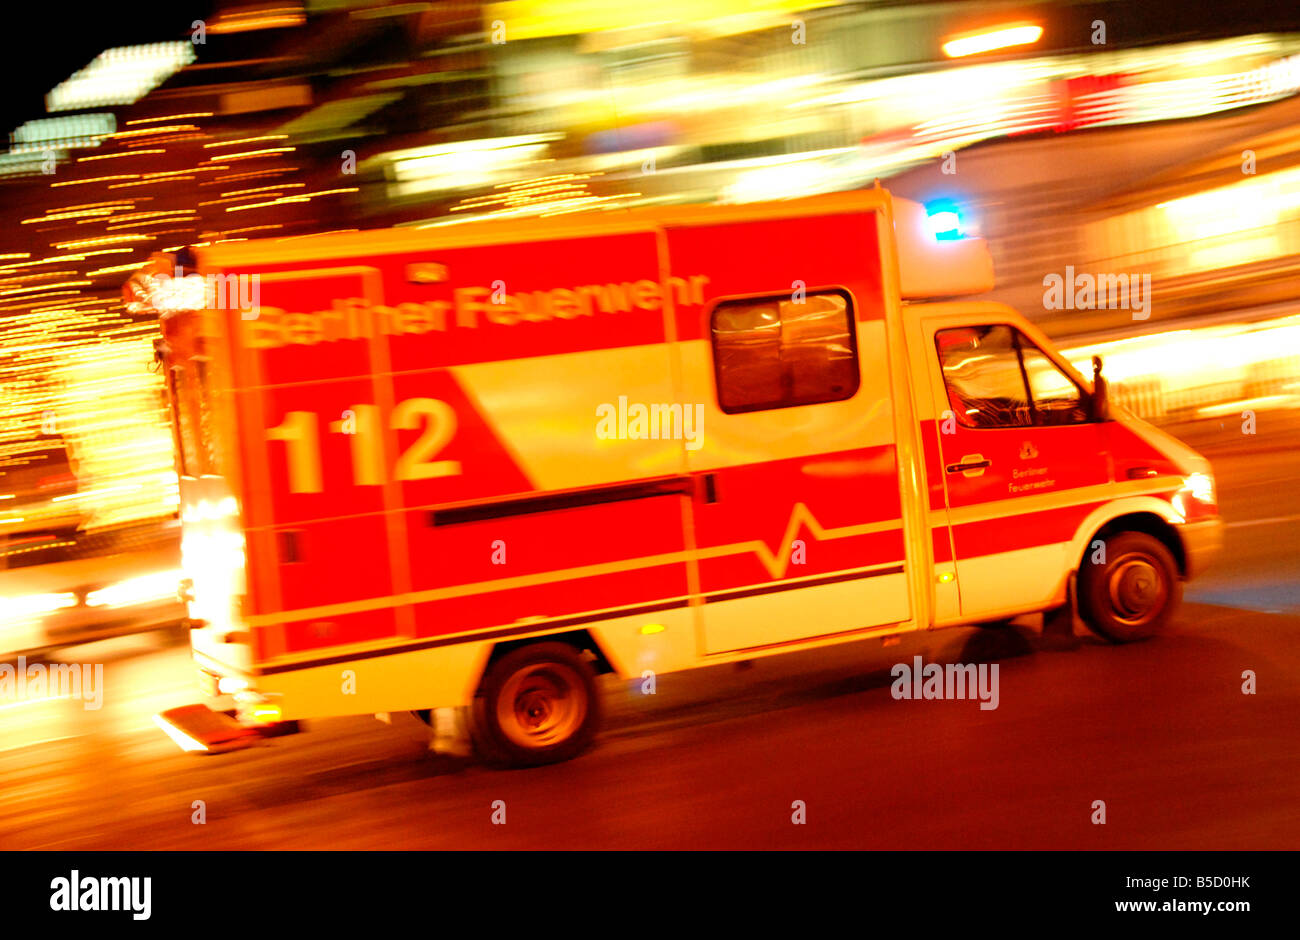 Rescue van of a fire brigade, Berlin, Germany Stock Photo